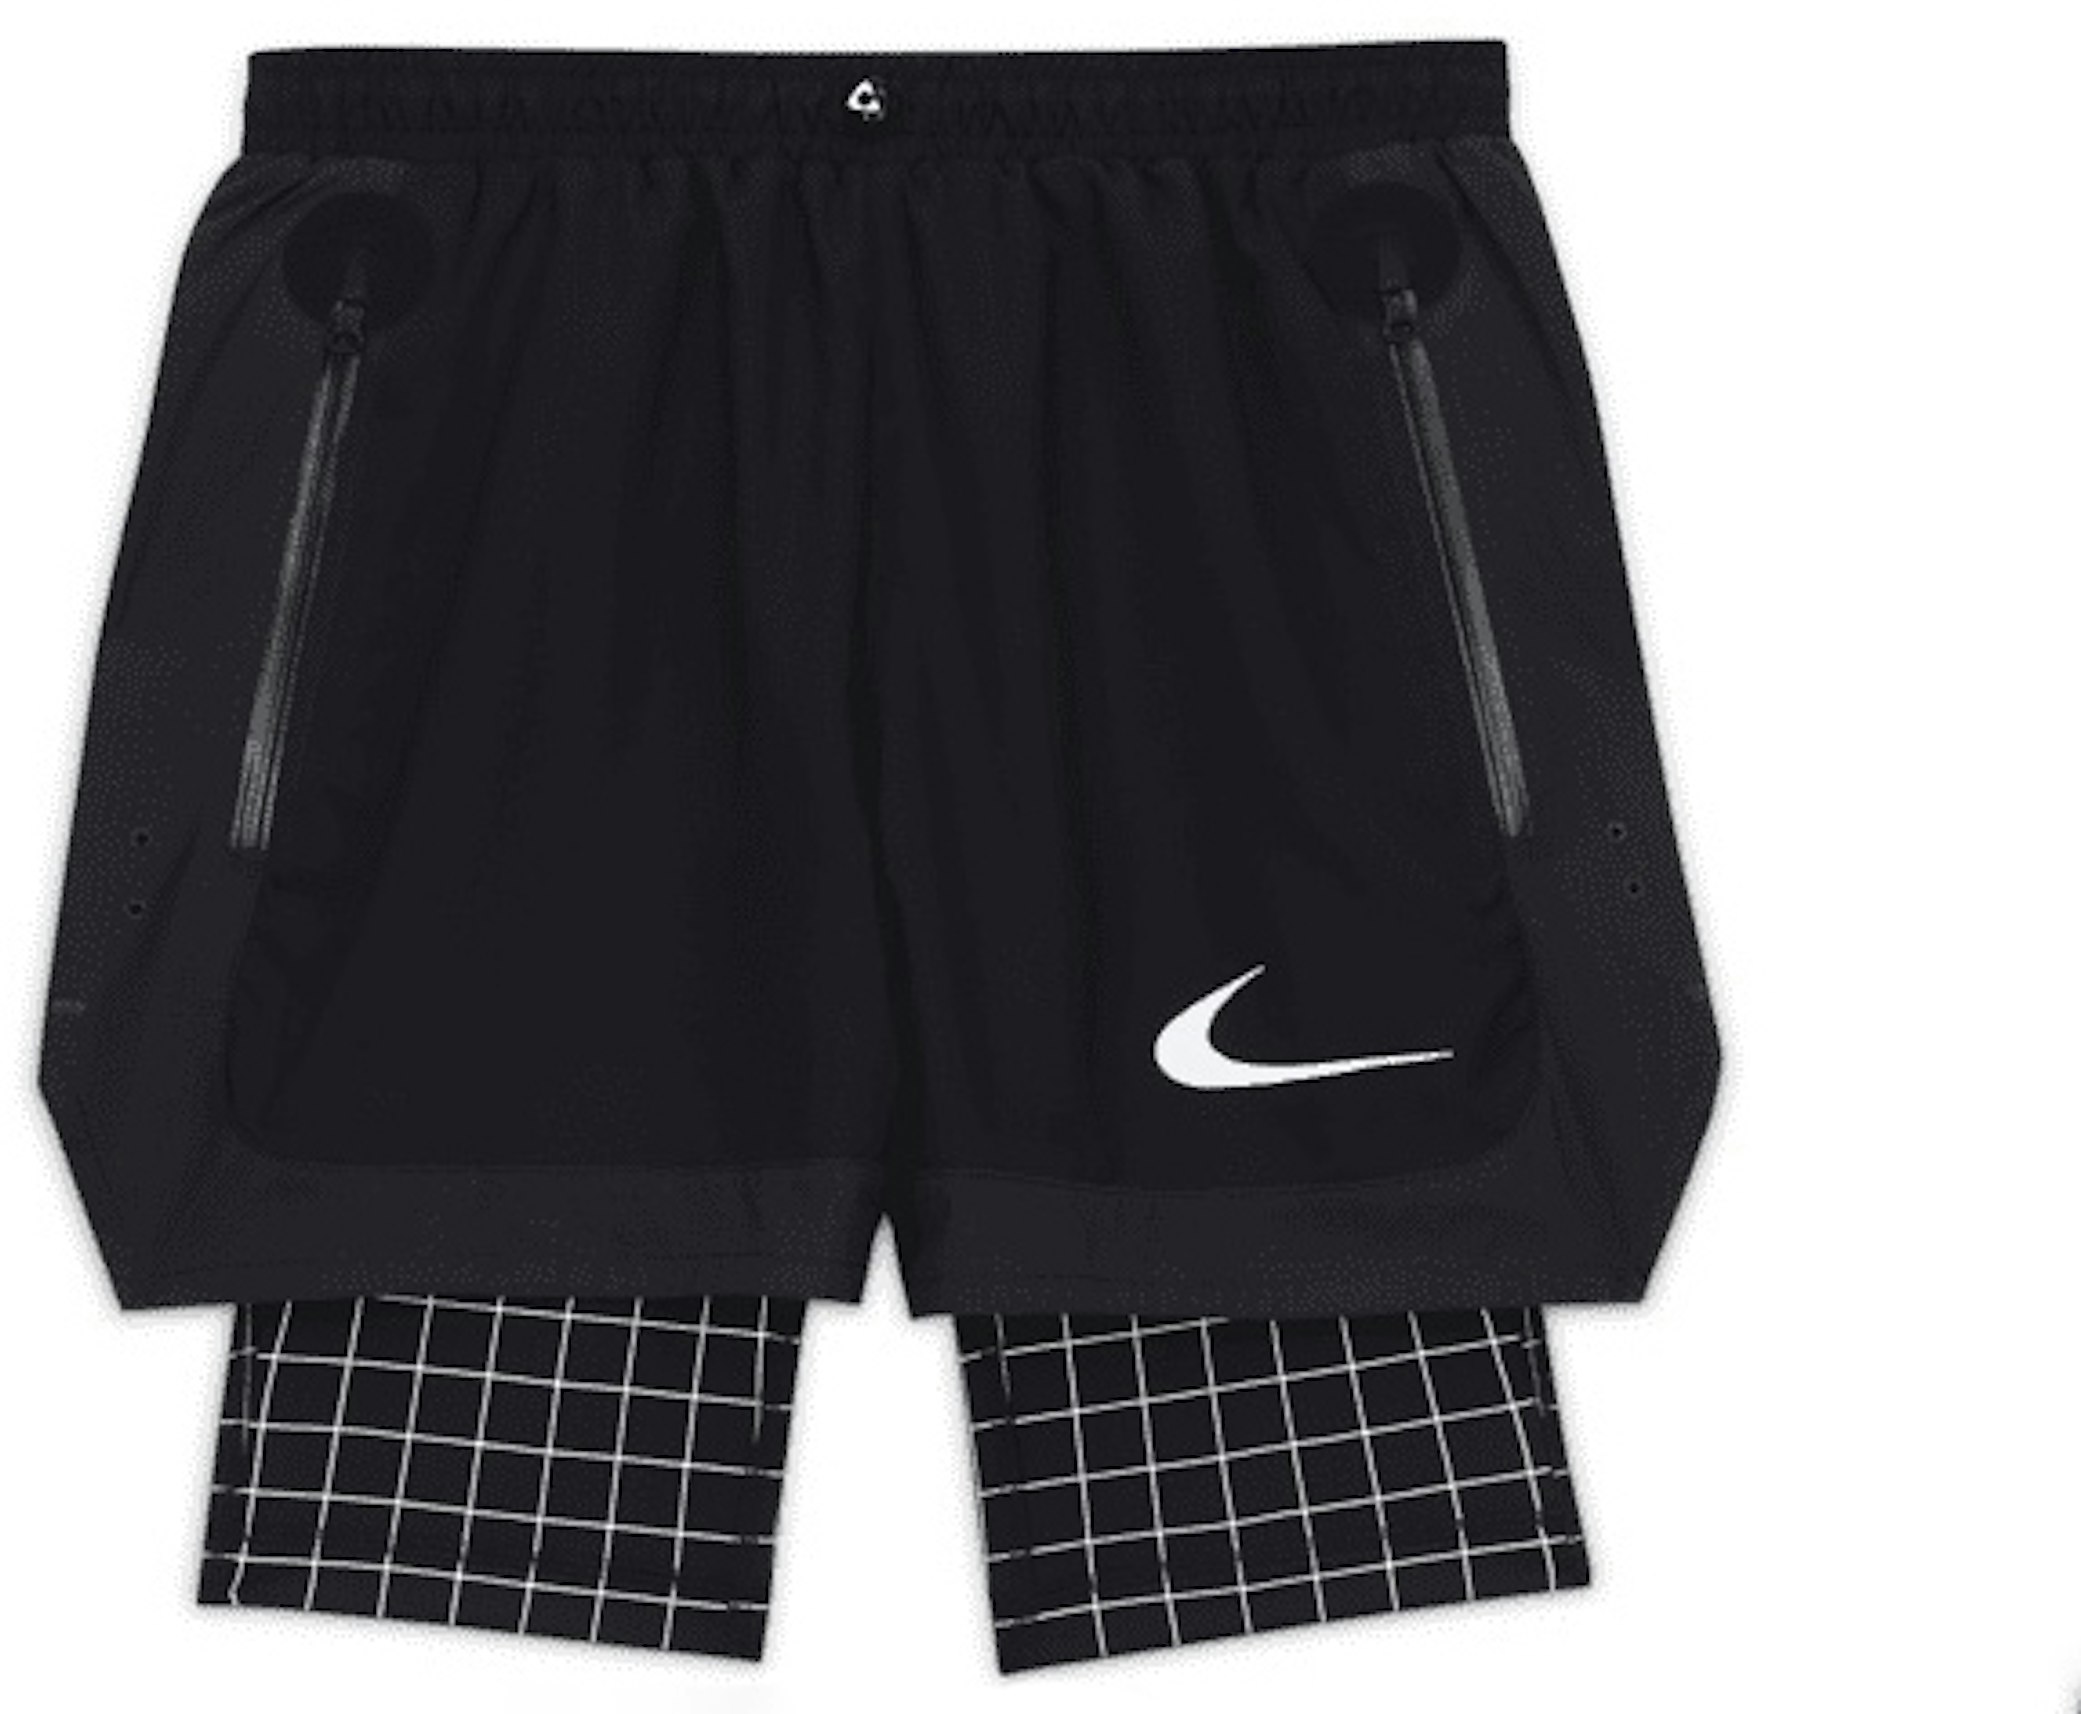 Off-White x Shorts Black Grid - US